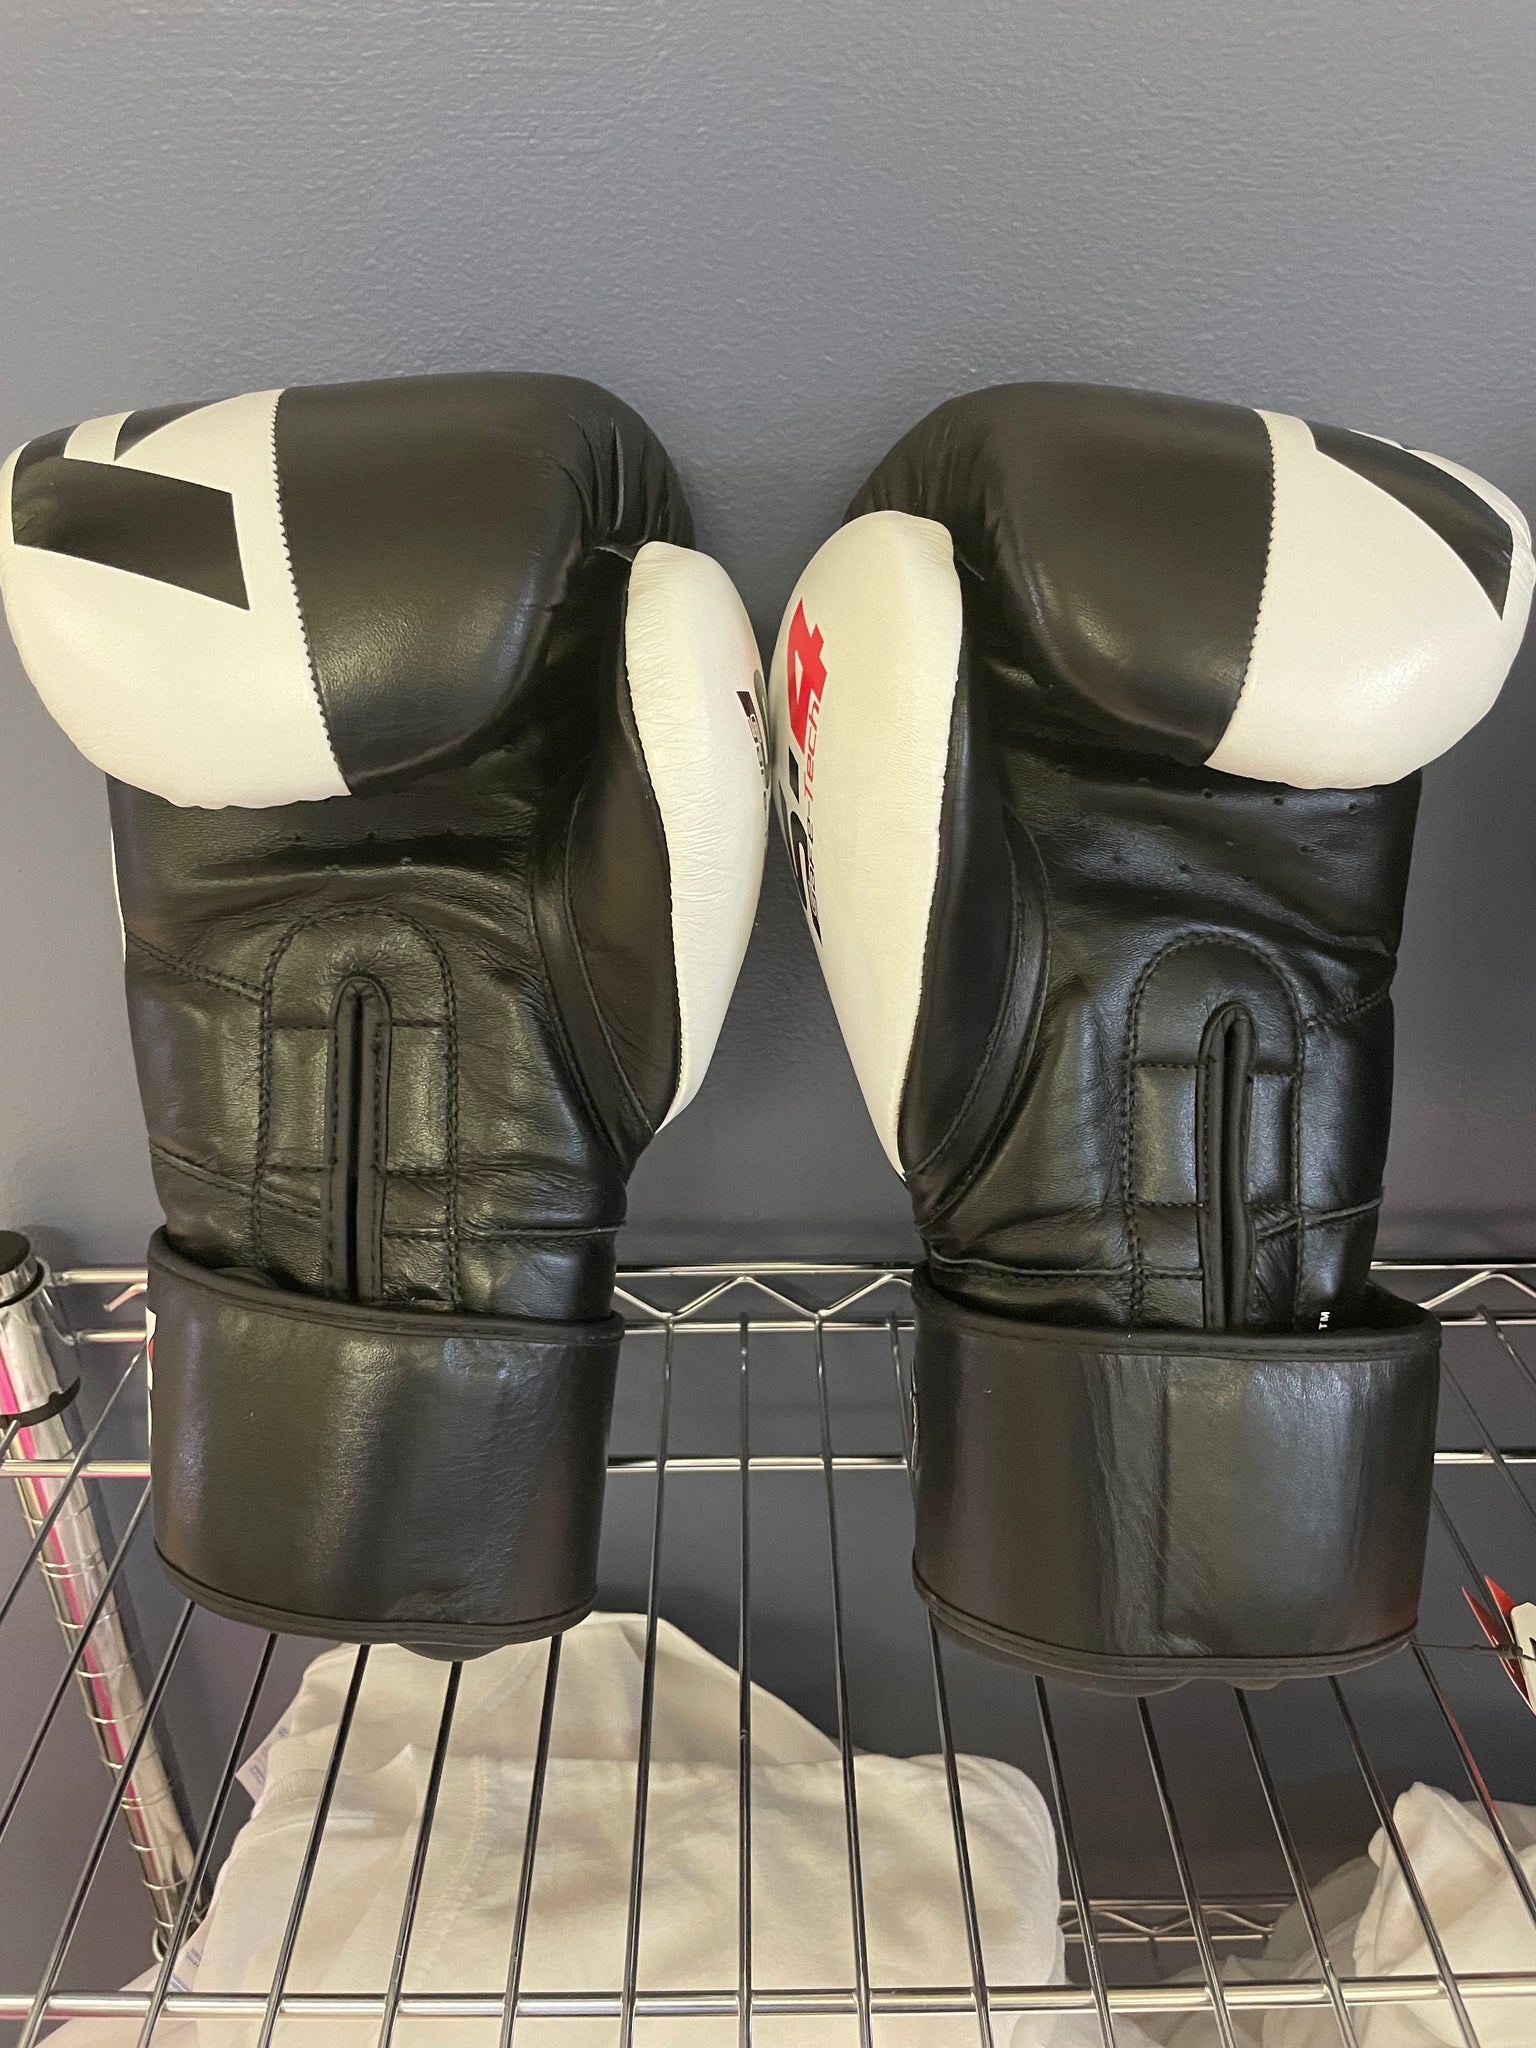 RDX F6 Kara Boxing Training Glove – Rob's Fight Shop